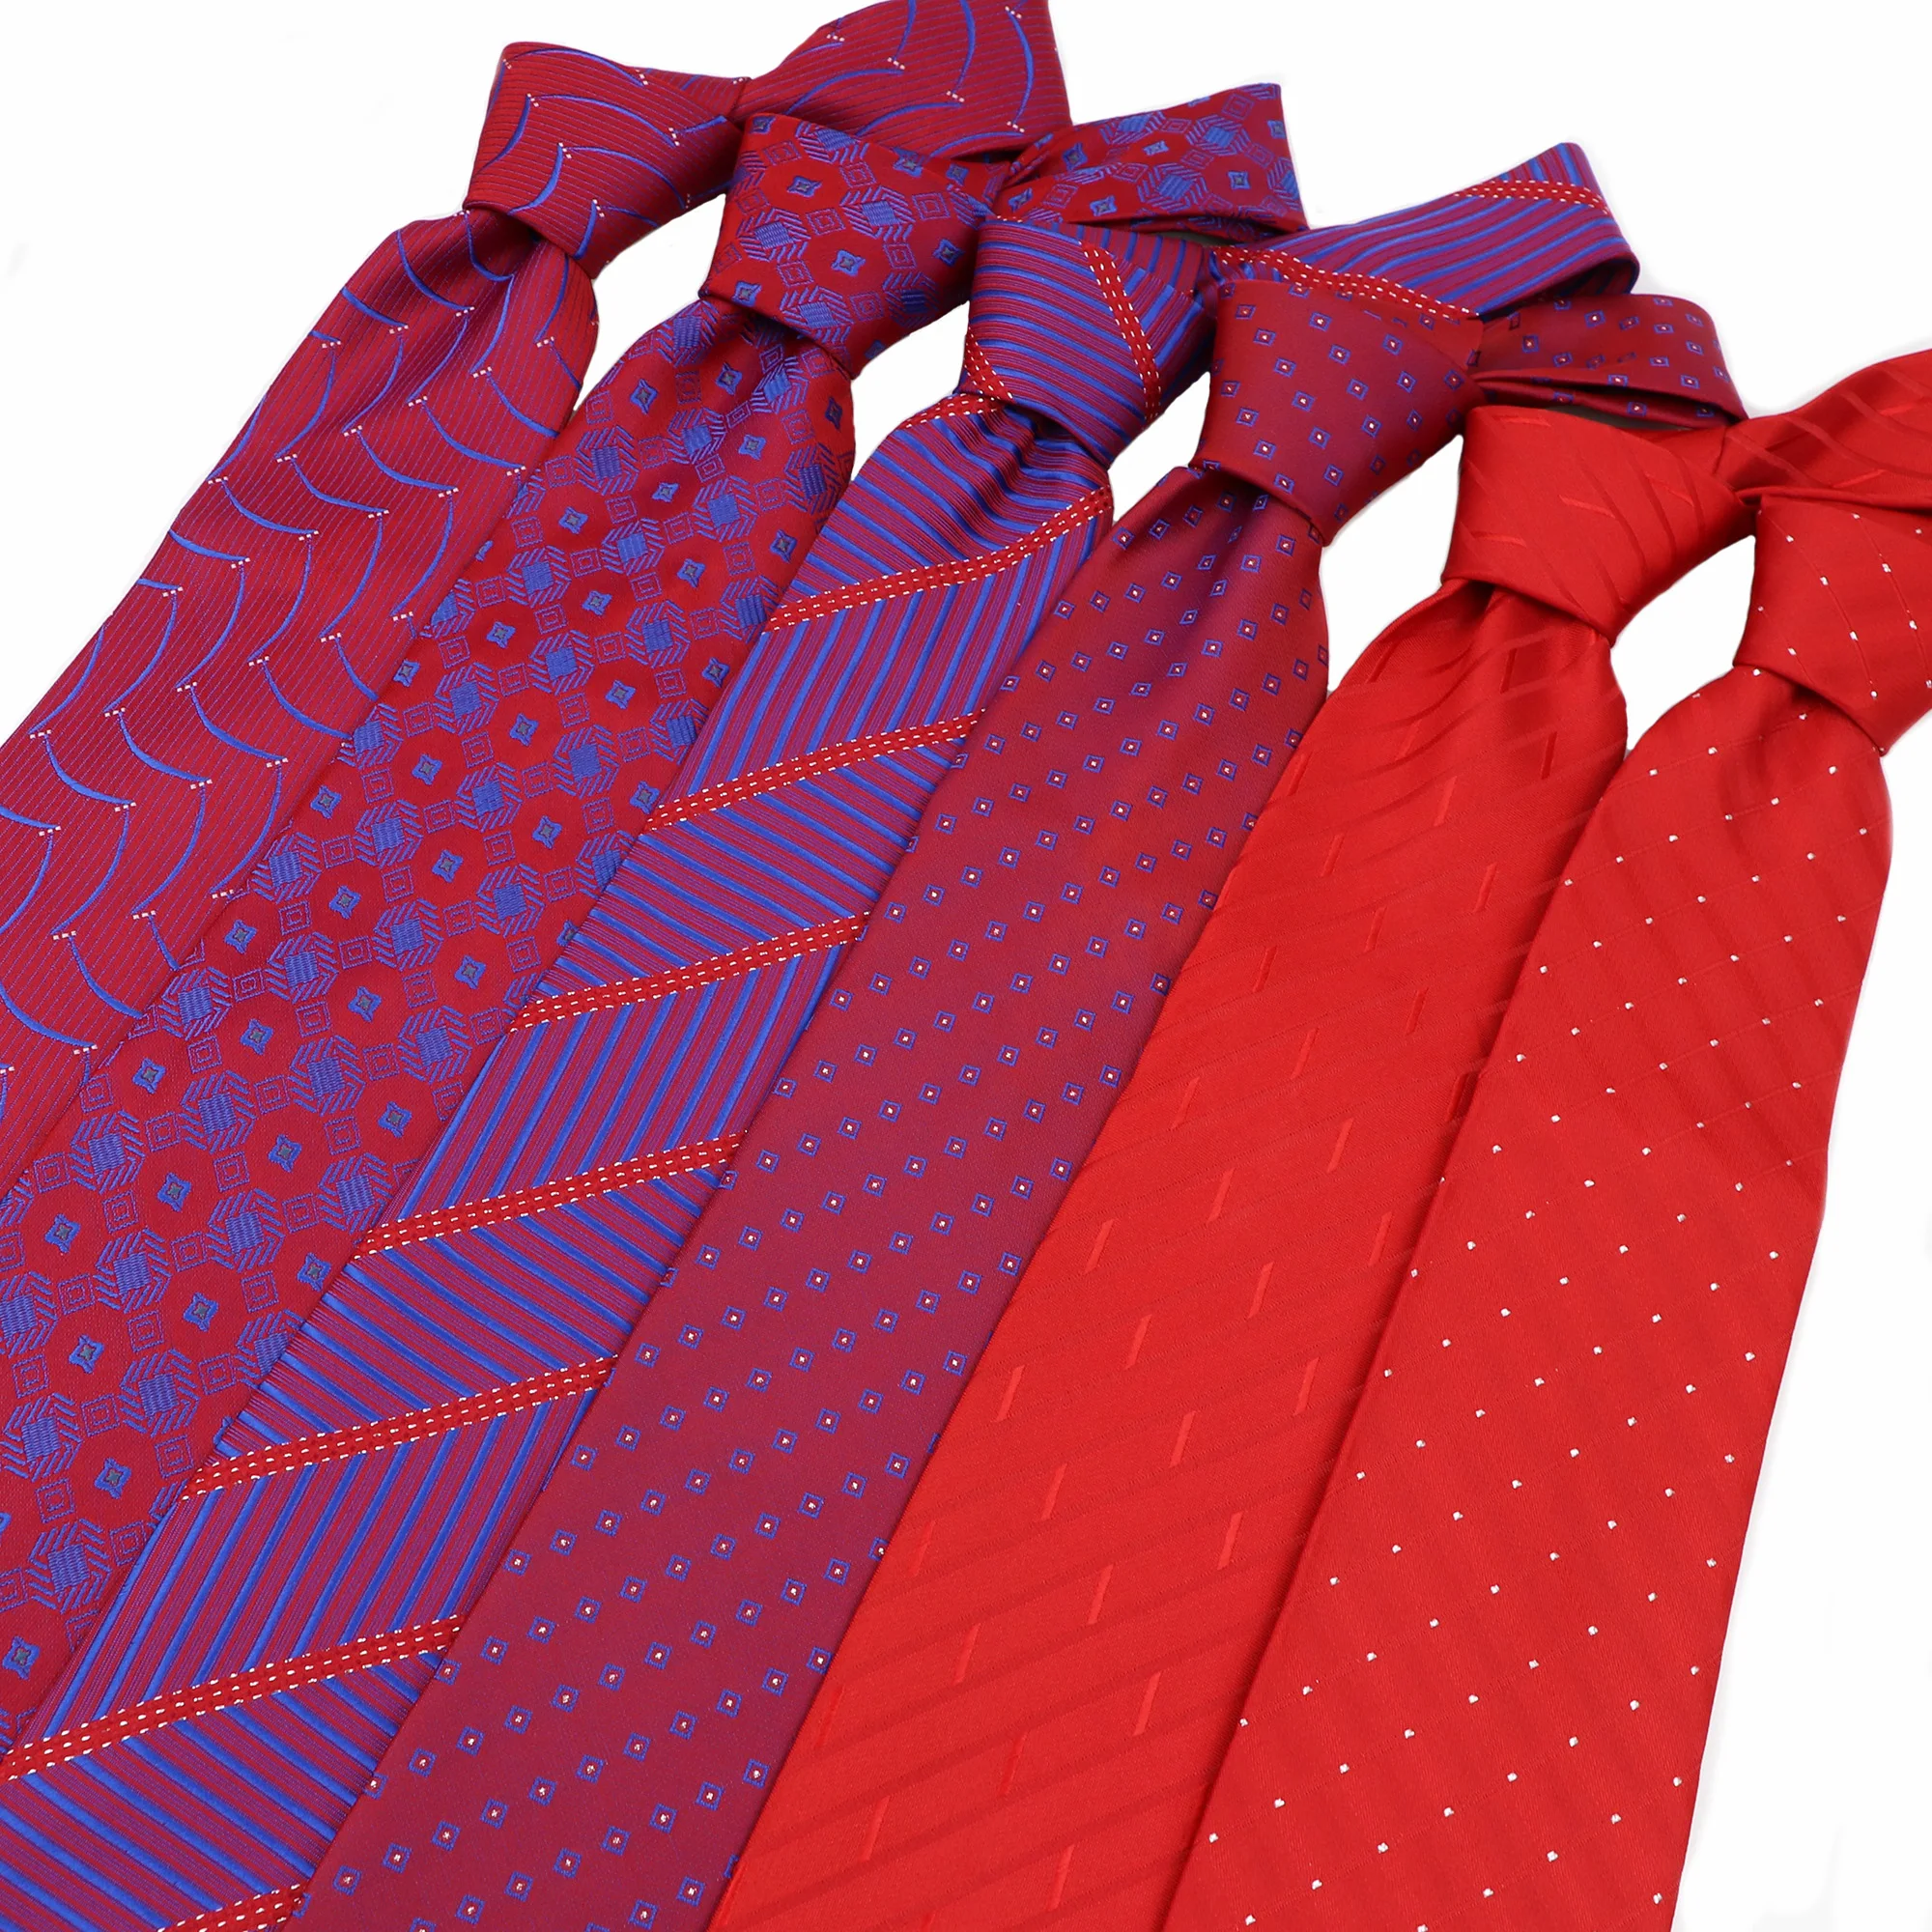 Hot Classic Striped Black Red JACQUARD WOVEN 100% Silk Men's Tie Necktie